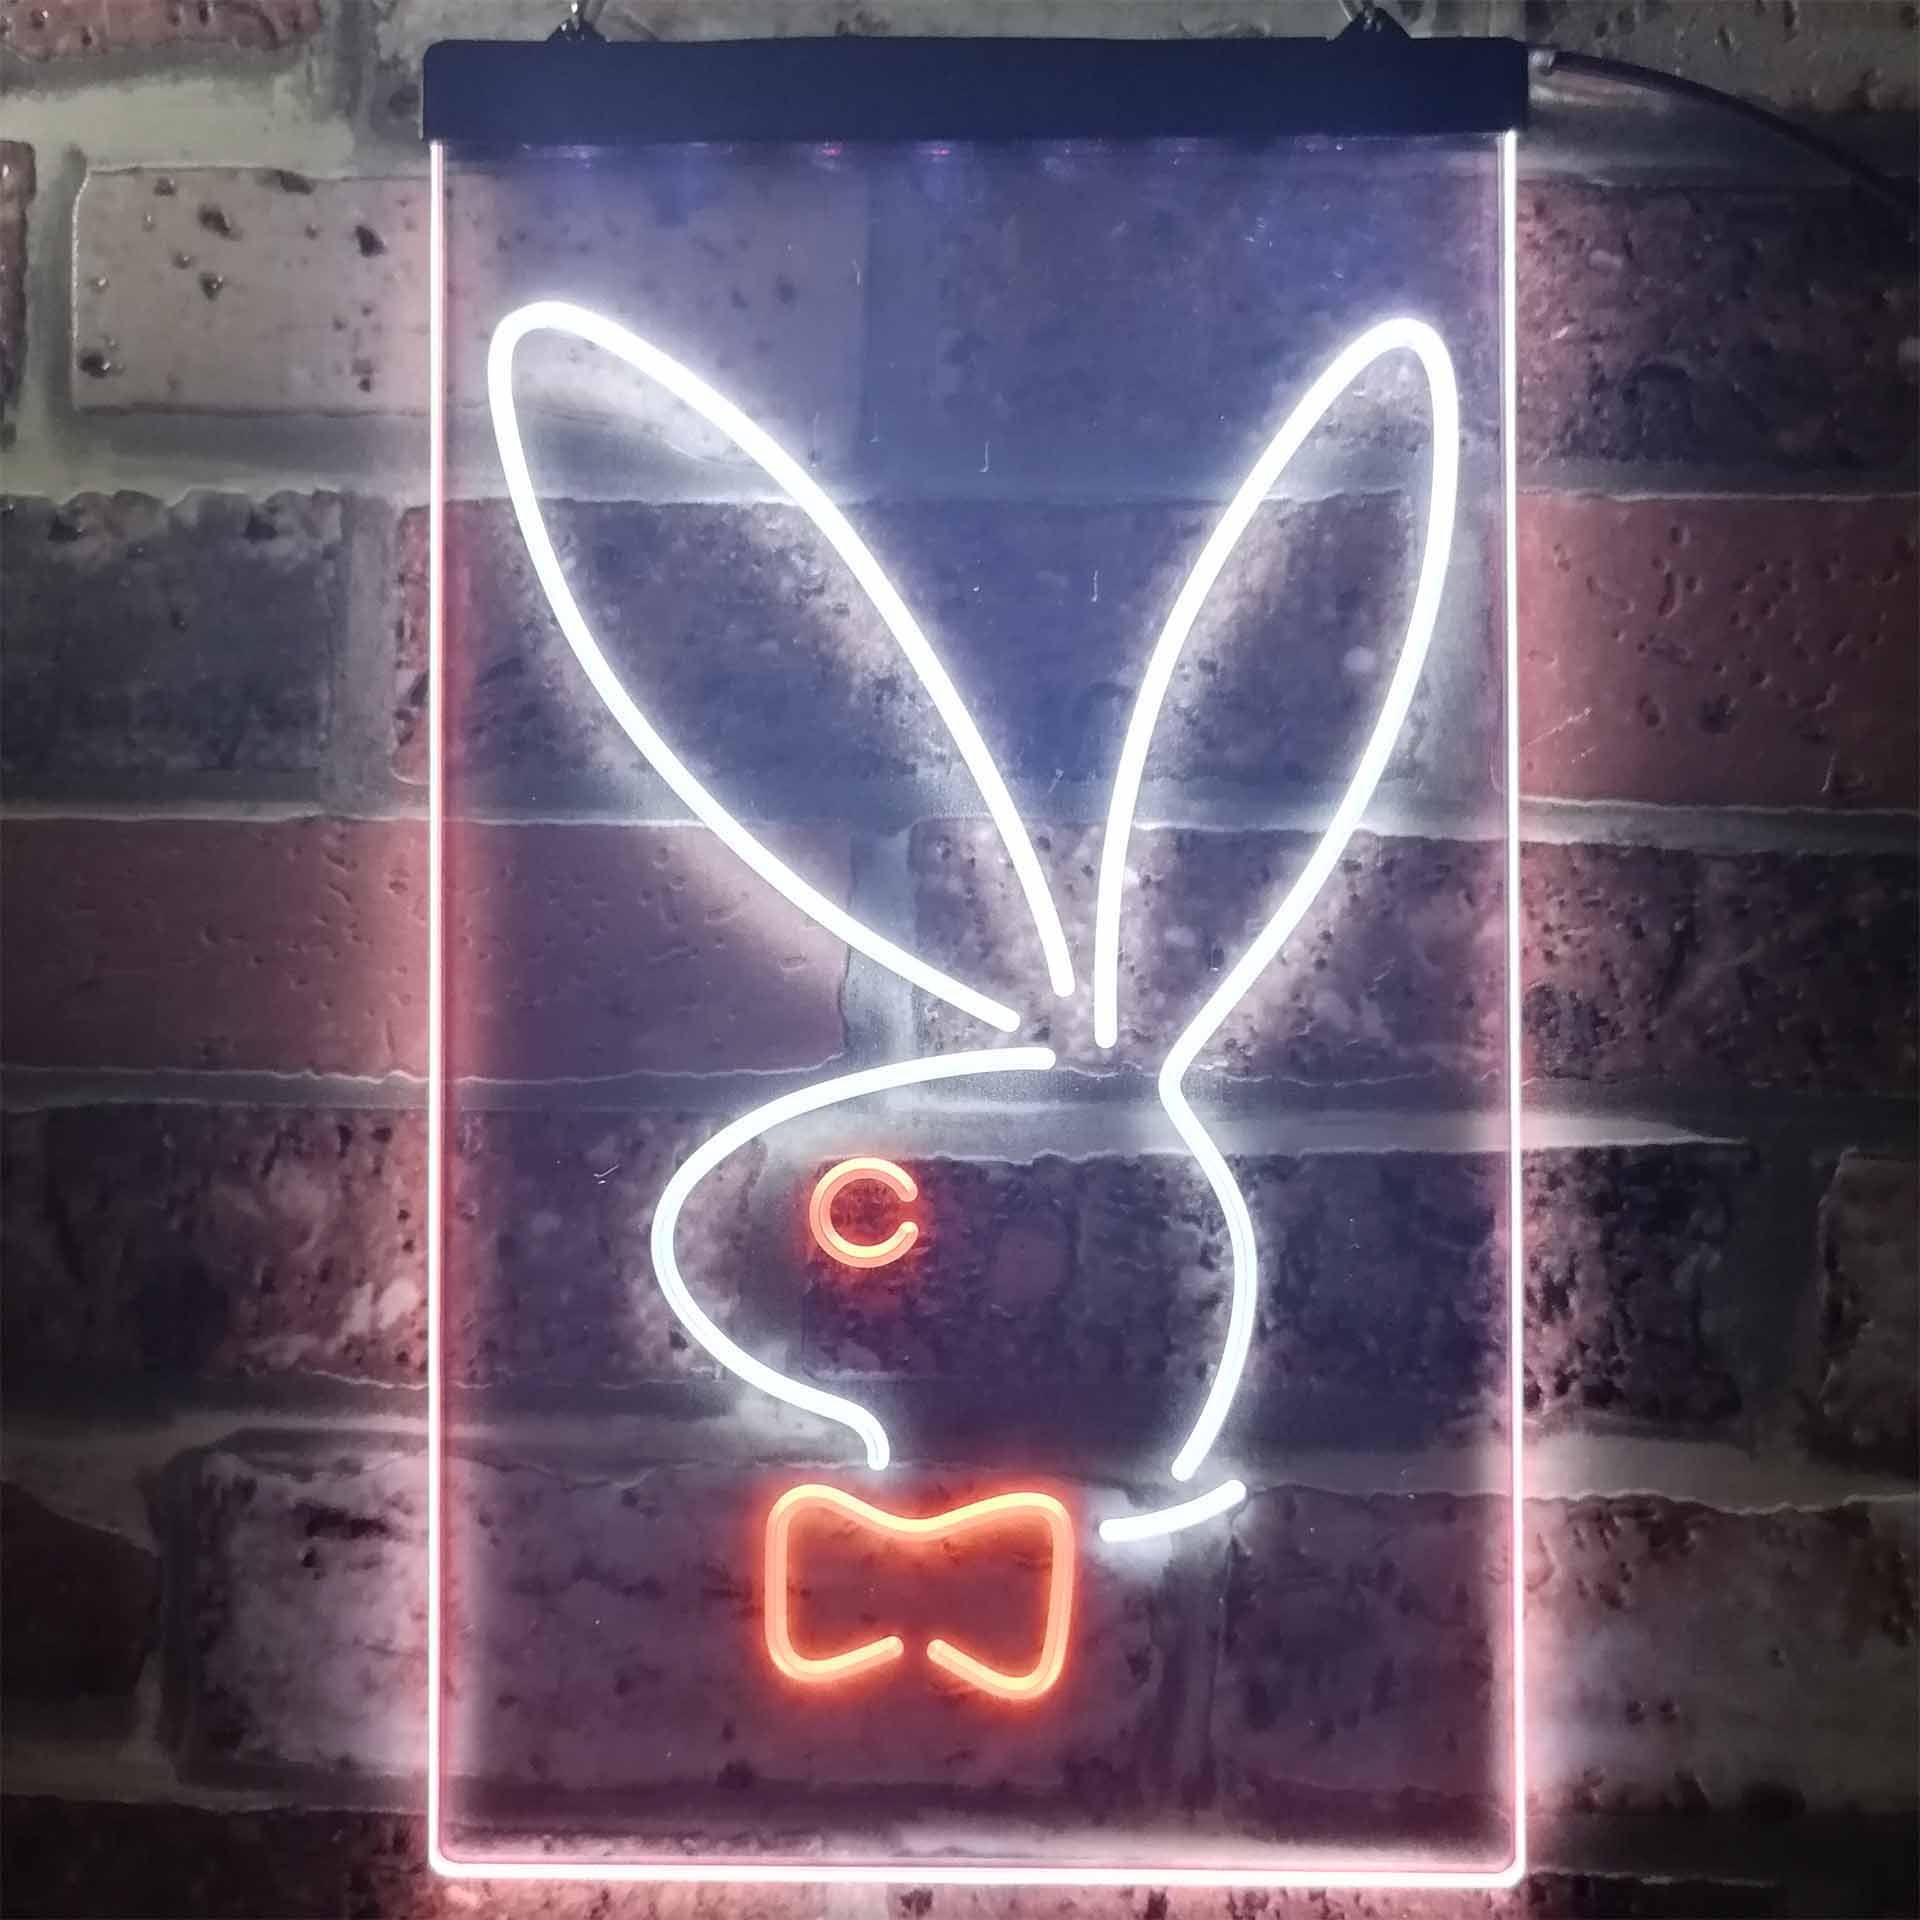 Bunny Rabbit Neon LED Sign